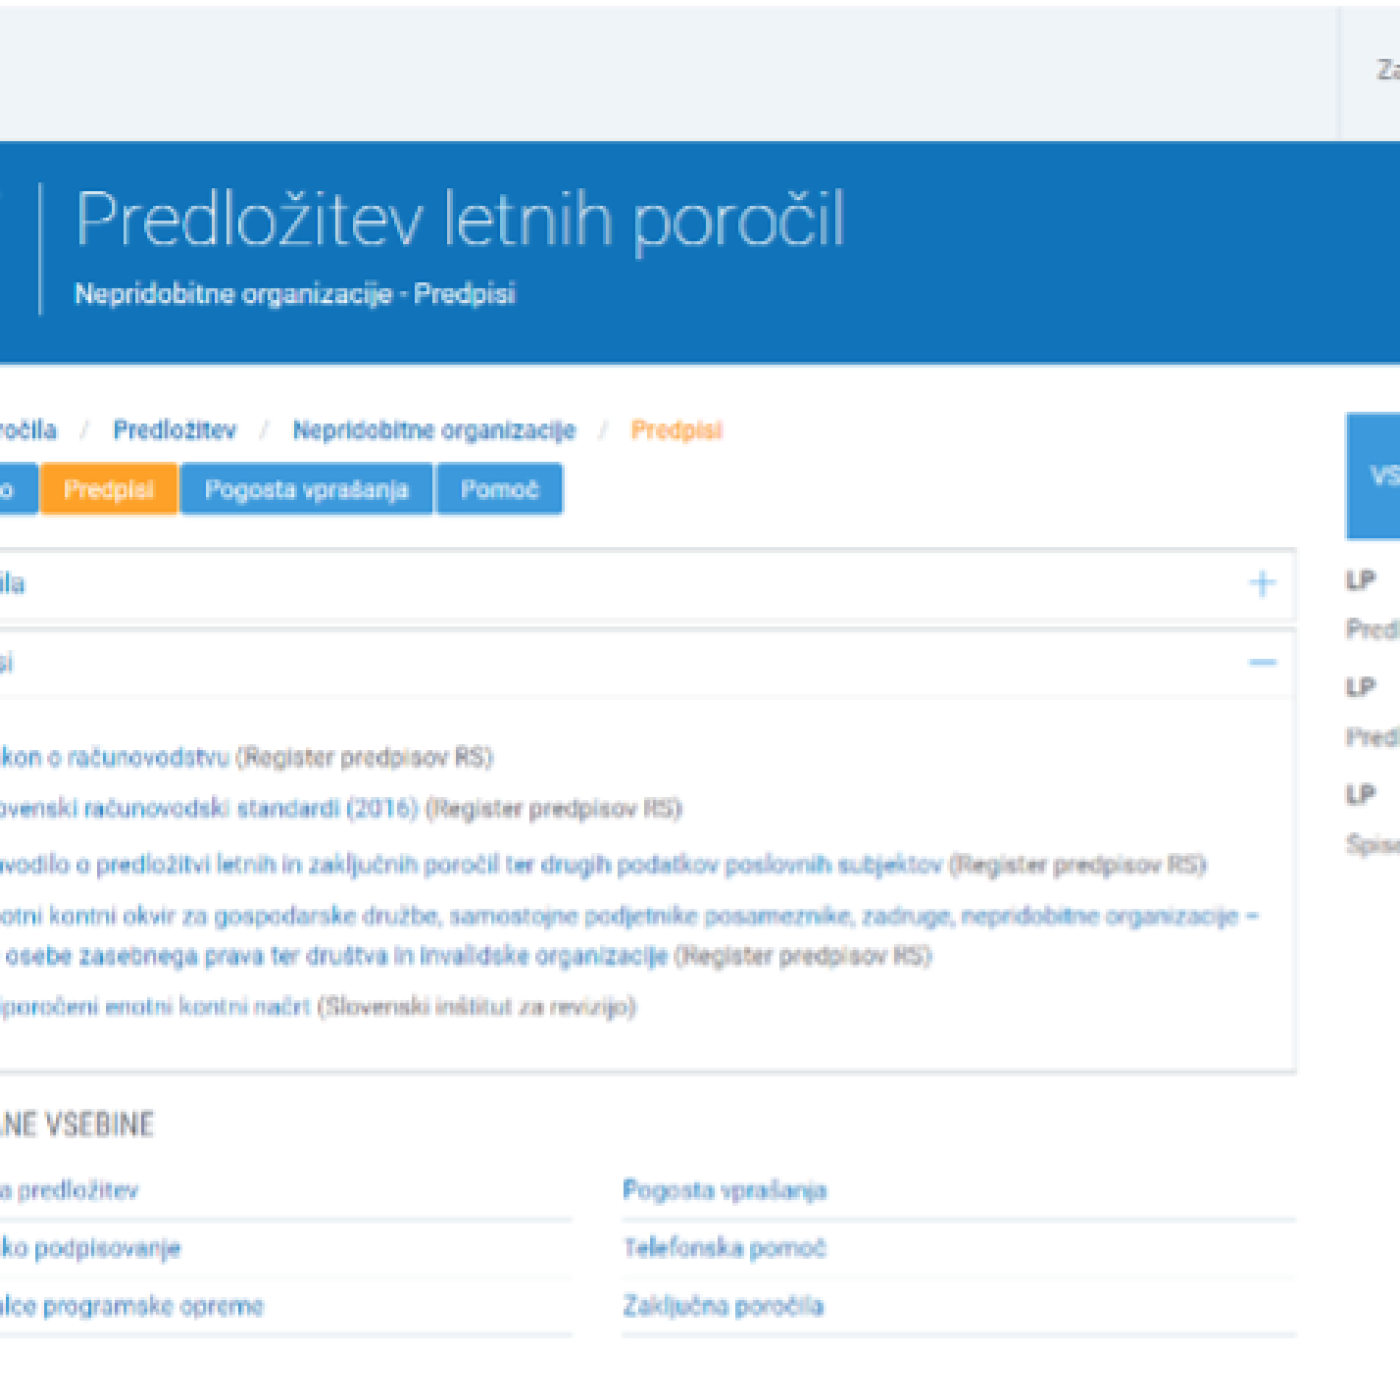 The reporting portal used in Slovenia